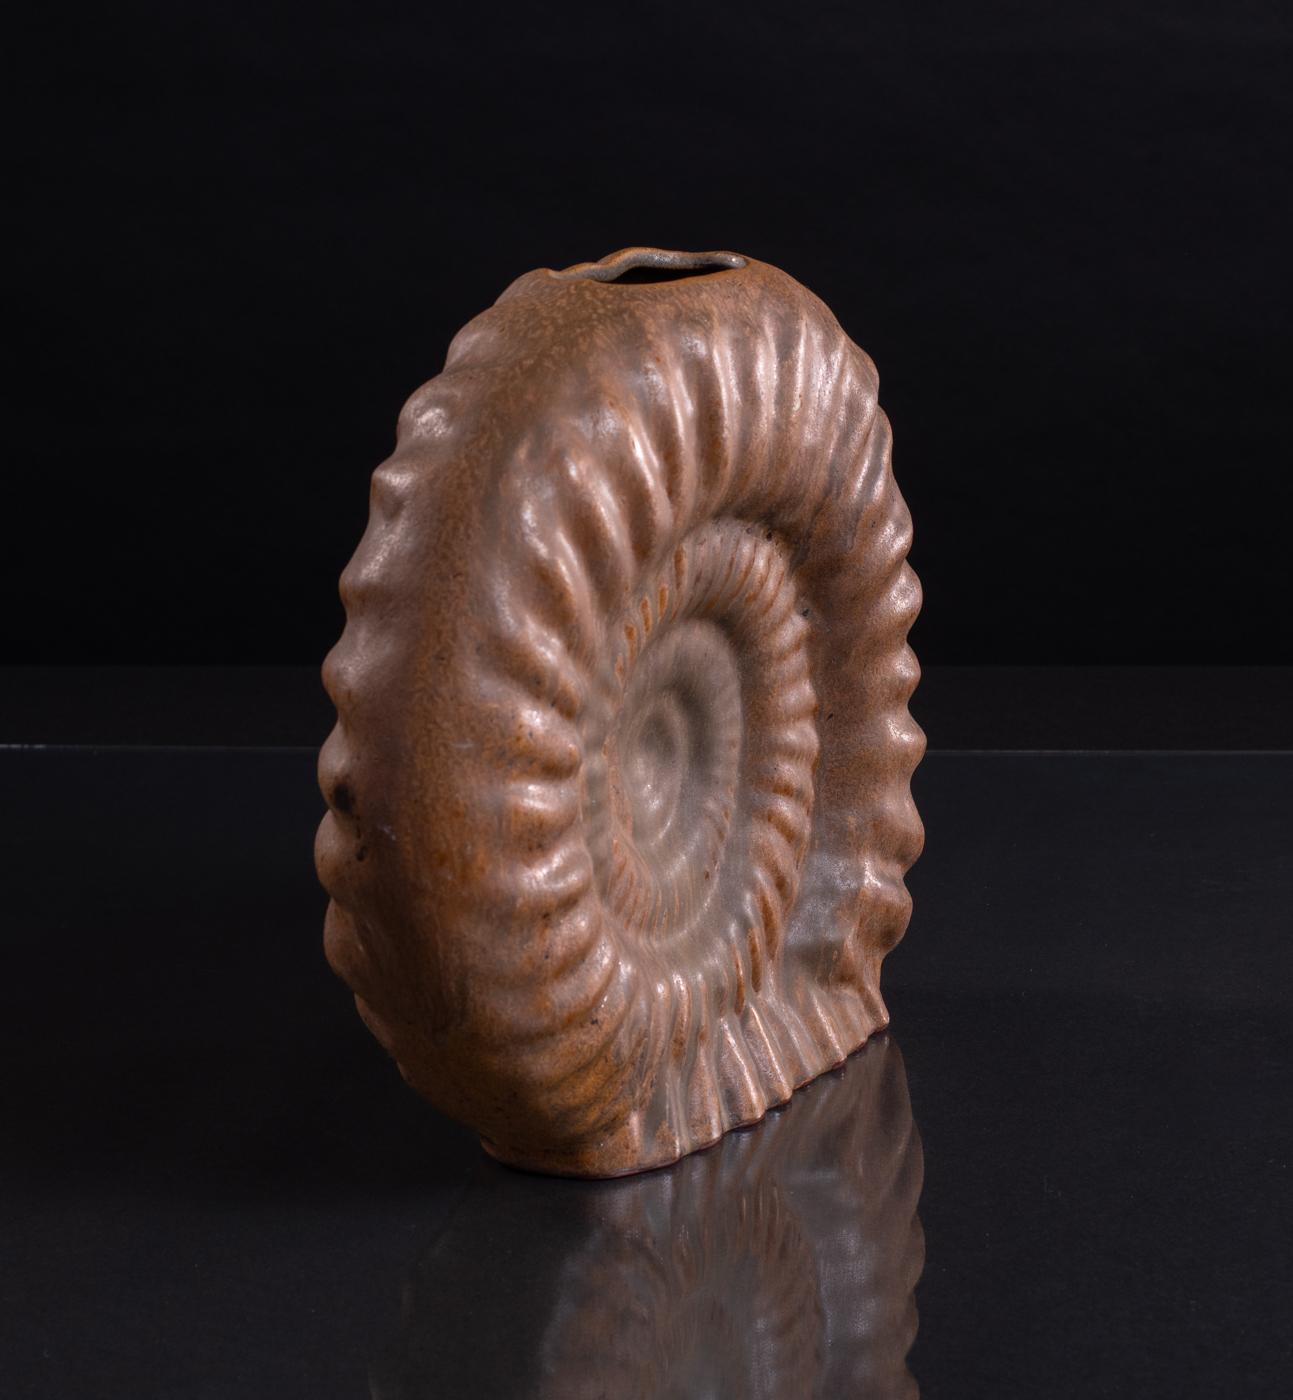 Hand-glazed, ammonite-shaped vase in a deep rust color made by Helmut Schäffenacker. Numbered in the base. Form V-6. 

Helmut Schäffenacker founded Atelier Schäffenacker in West Germany in 1948. His studio worked in ceramics, bronze, stone, wood,